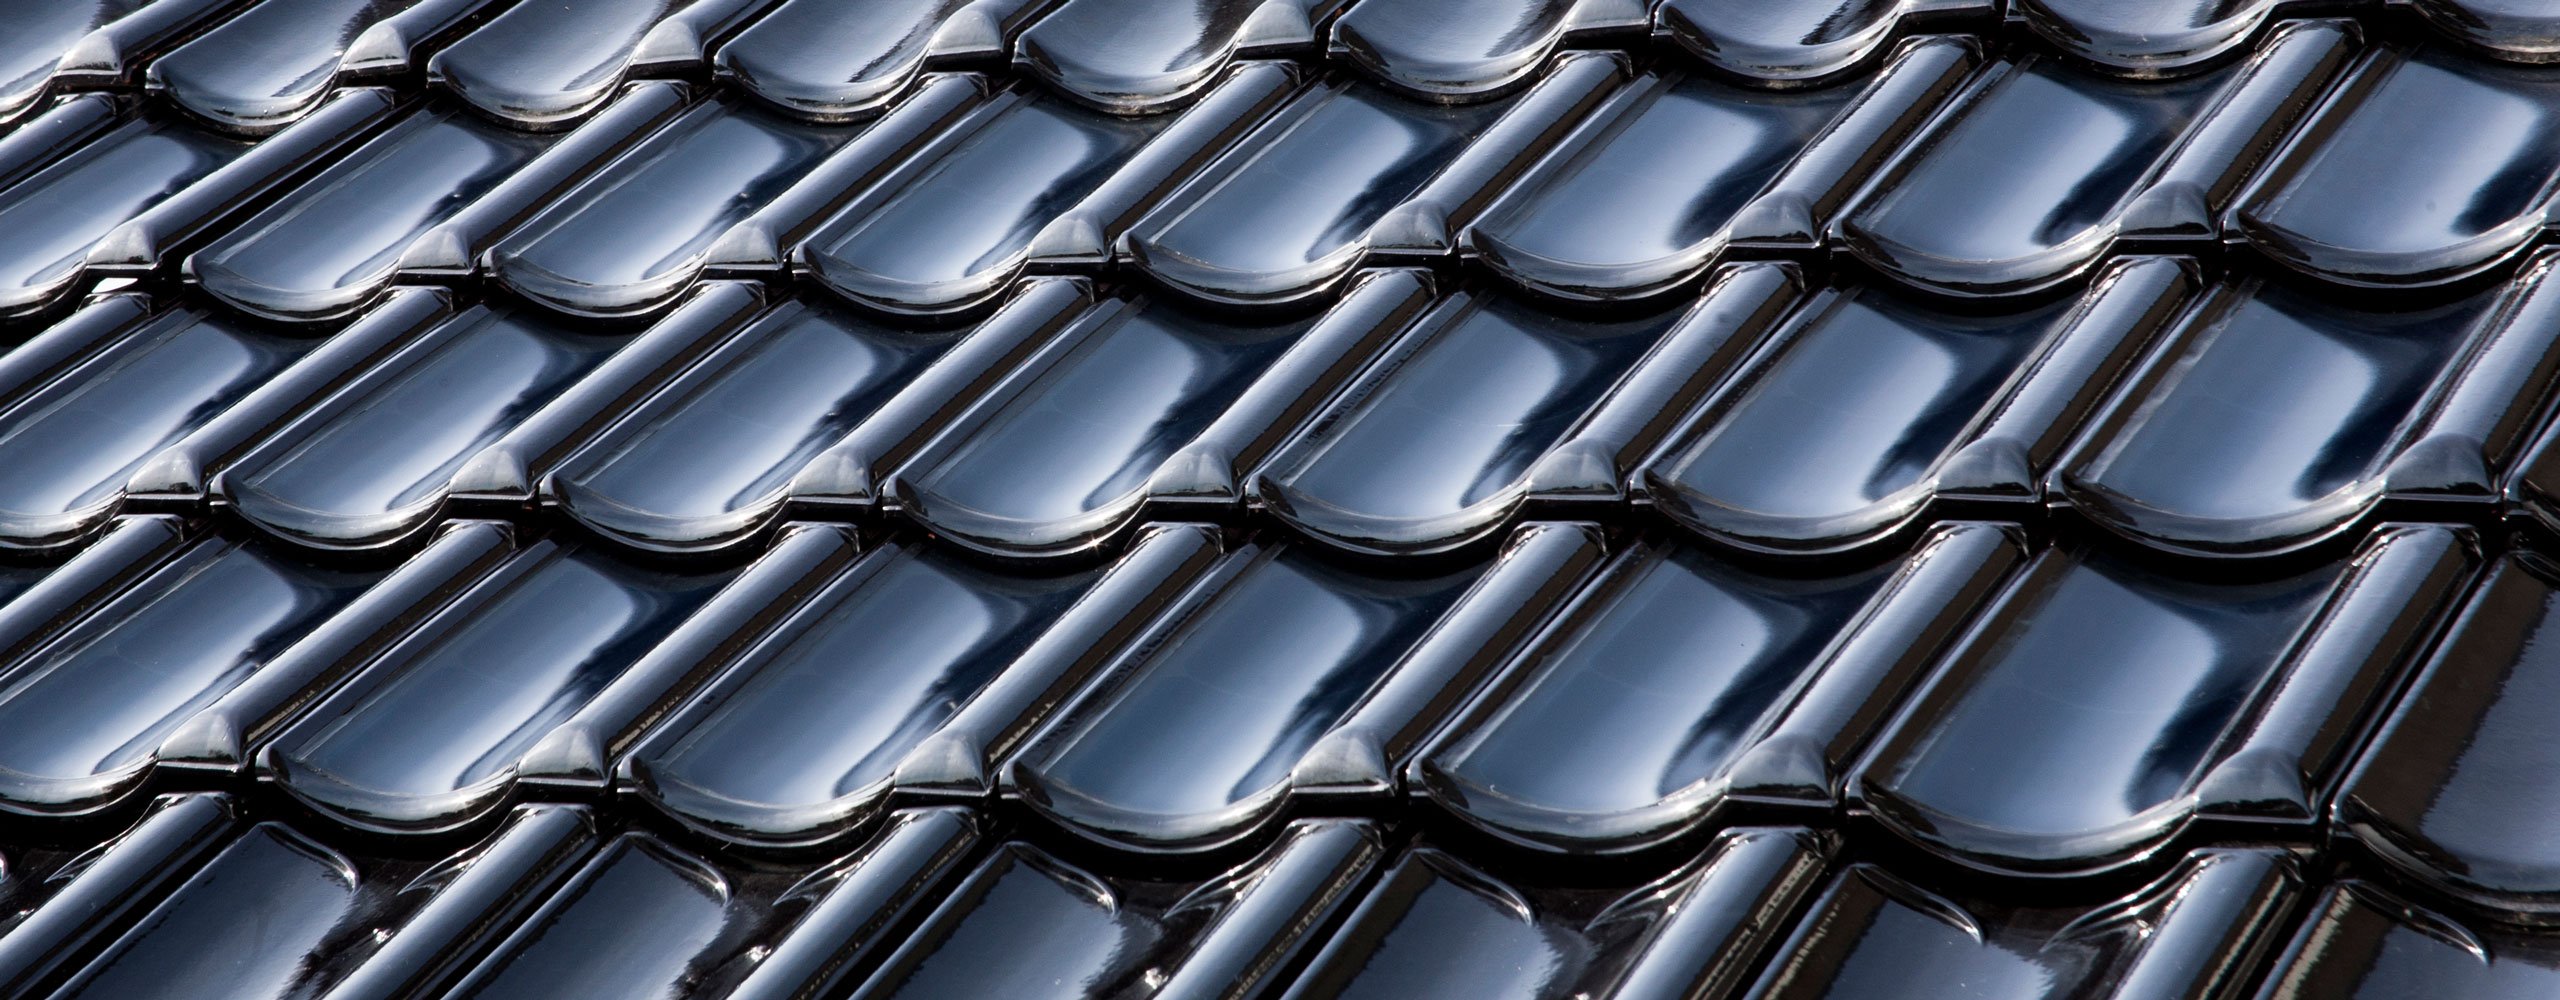 Solar roof tile in 2021 | Solar panels roof, Solar roof tiles, Solar roof